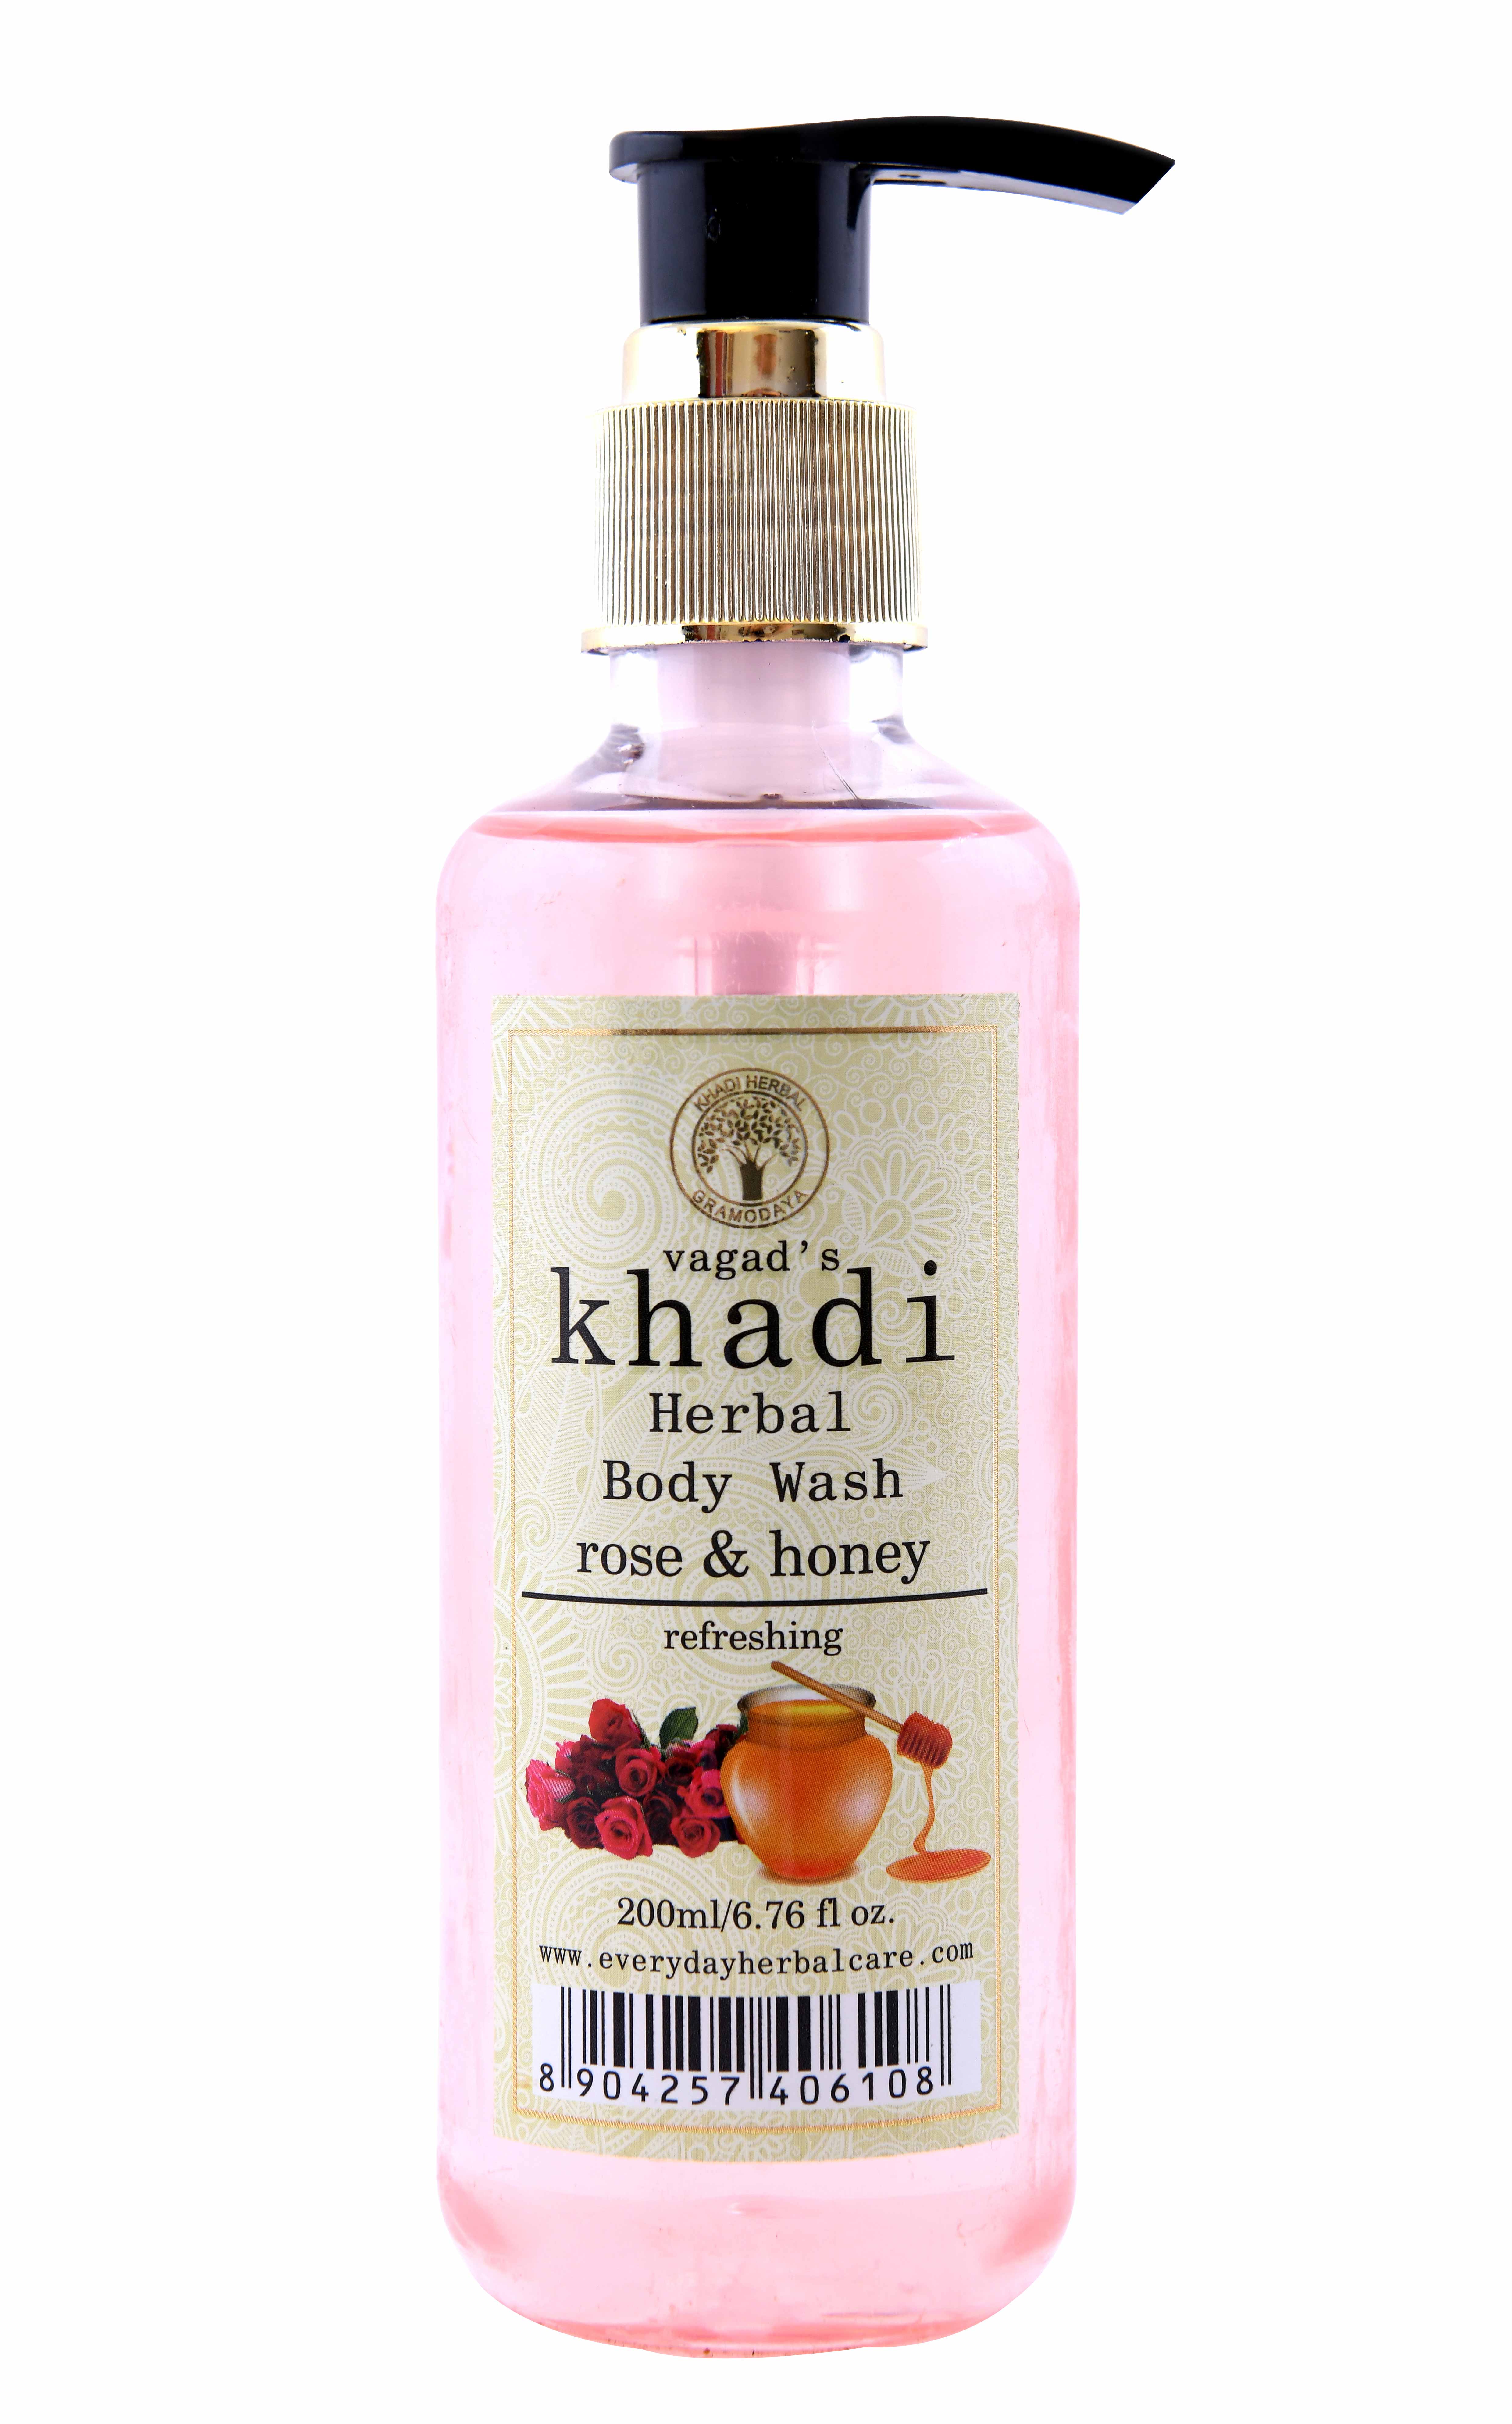 Buy Vagad's Khadi Rose And Honey Body Wash at Best Price Online